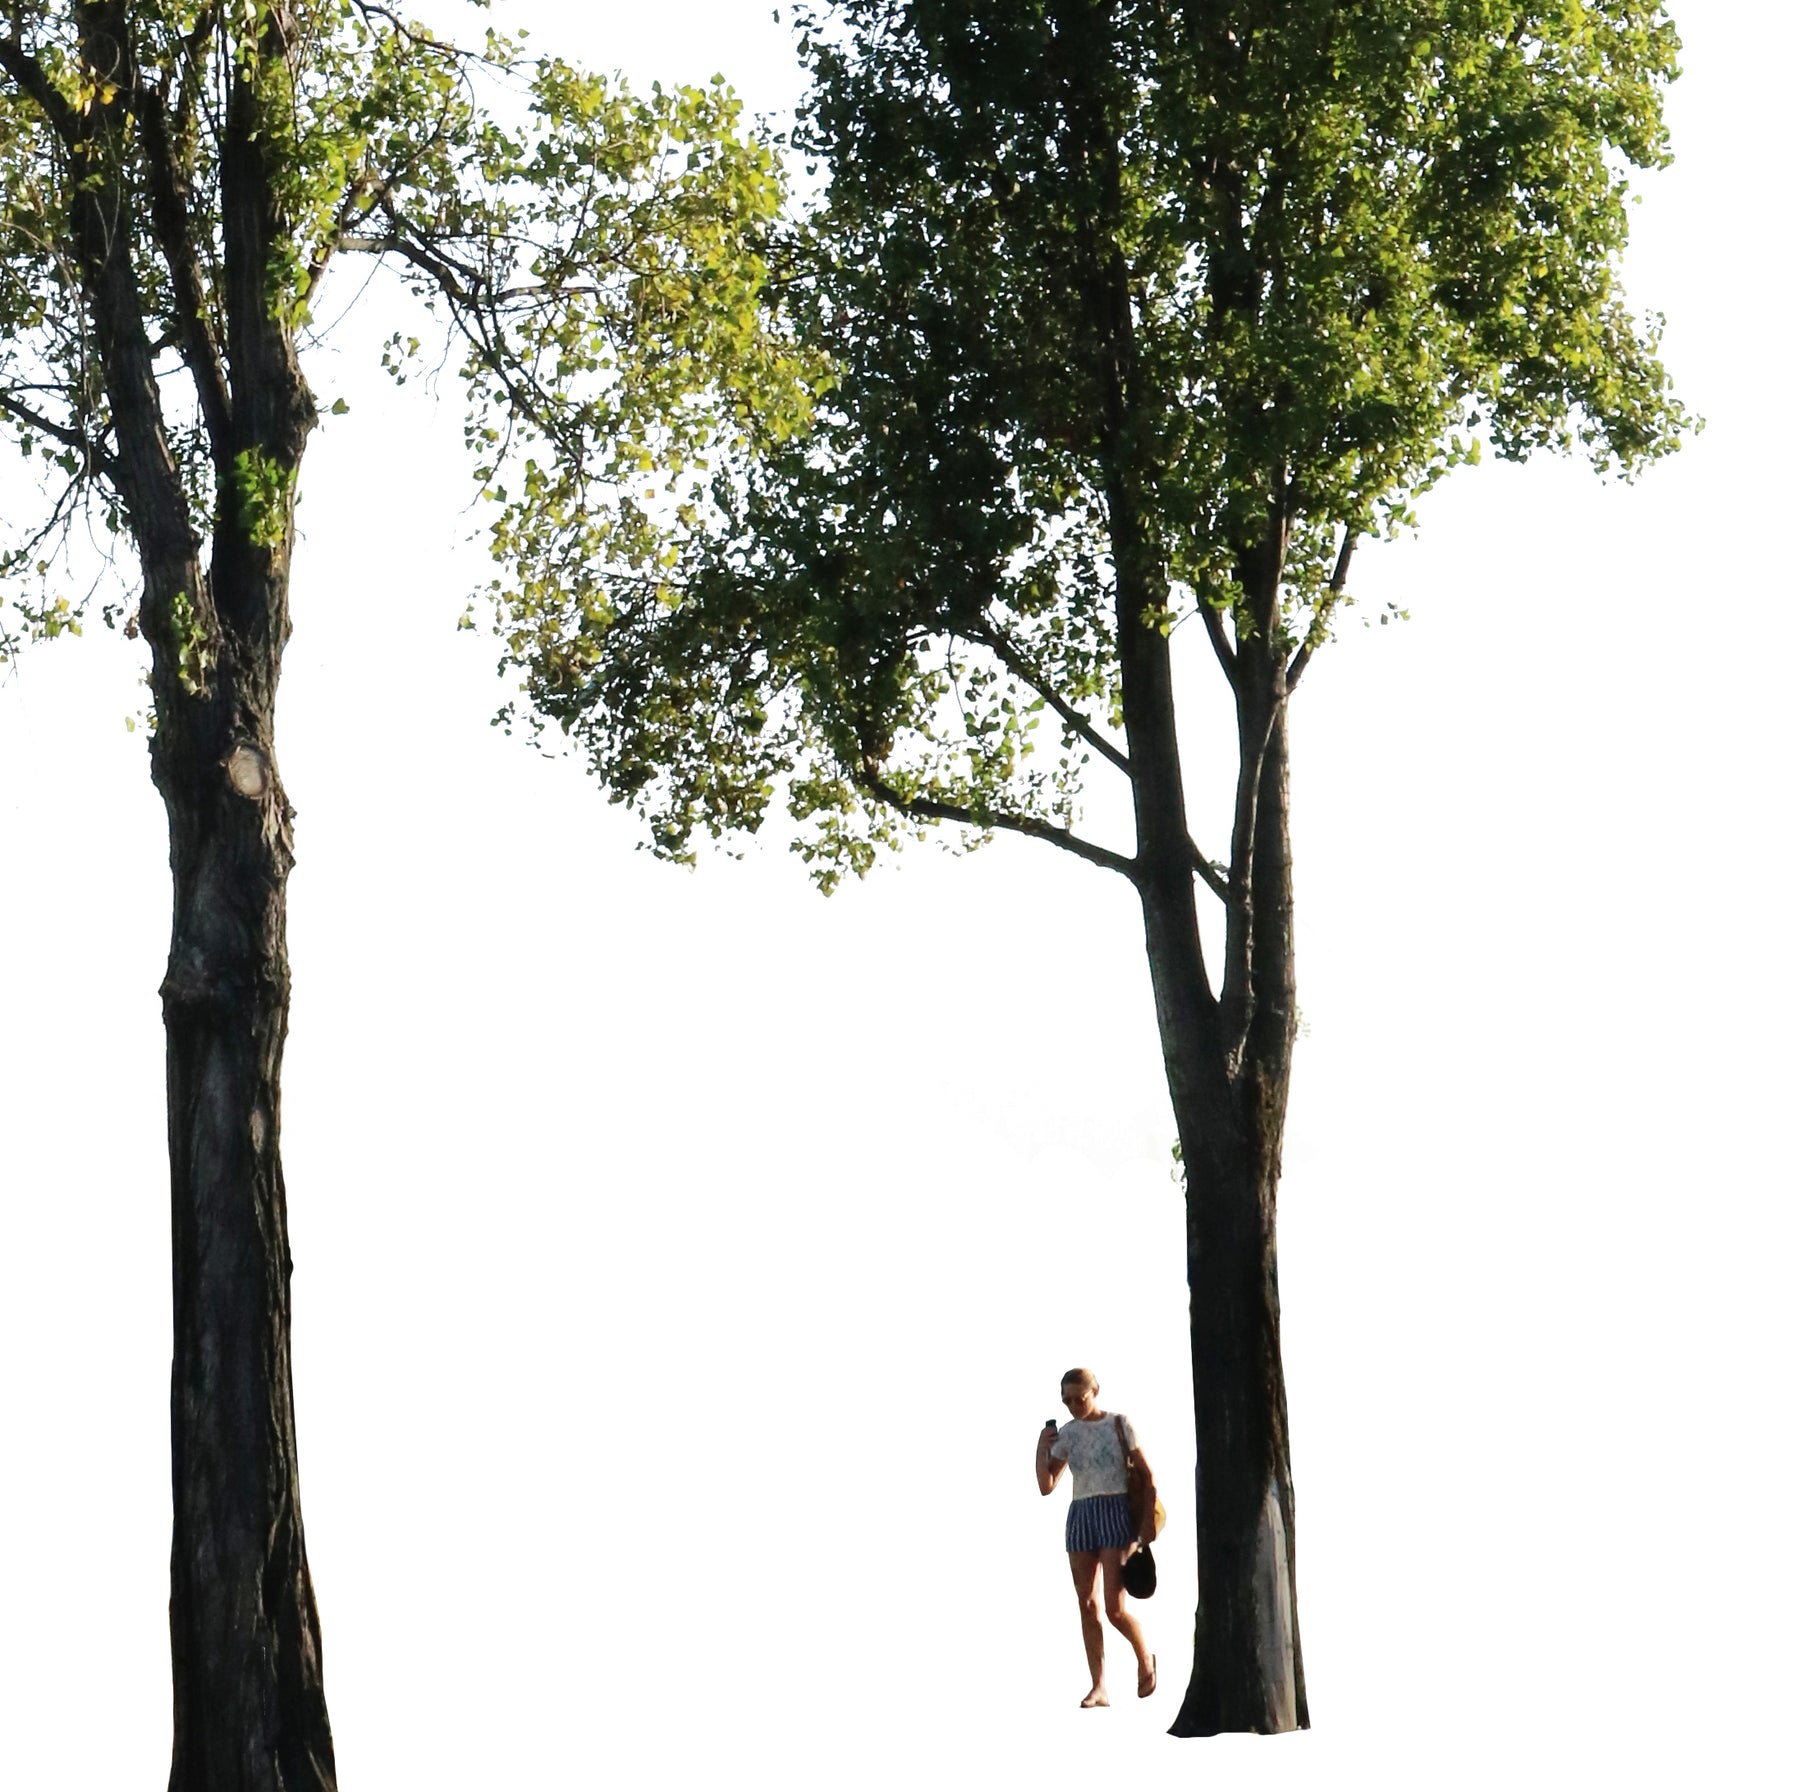 Populus nigra Group + People - cutout trees